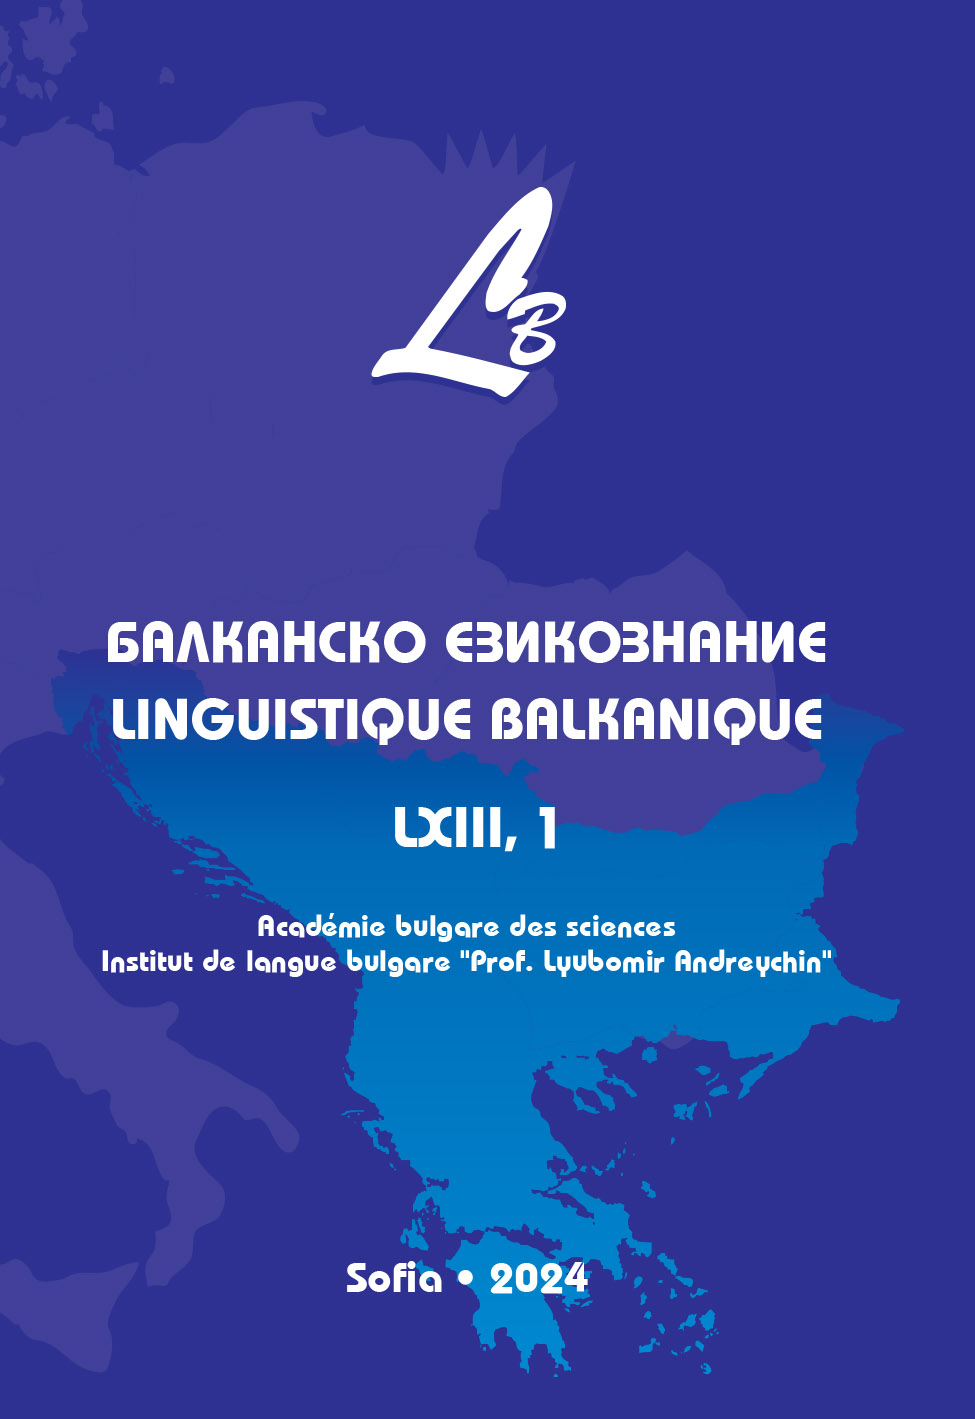 Slavic Languages in Contact, 11: Serbian between Turkish and Italian (ARAKÇINCI, ÇİZMECİ) Cover Image